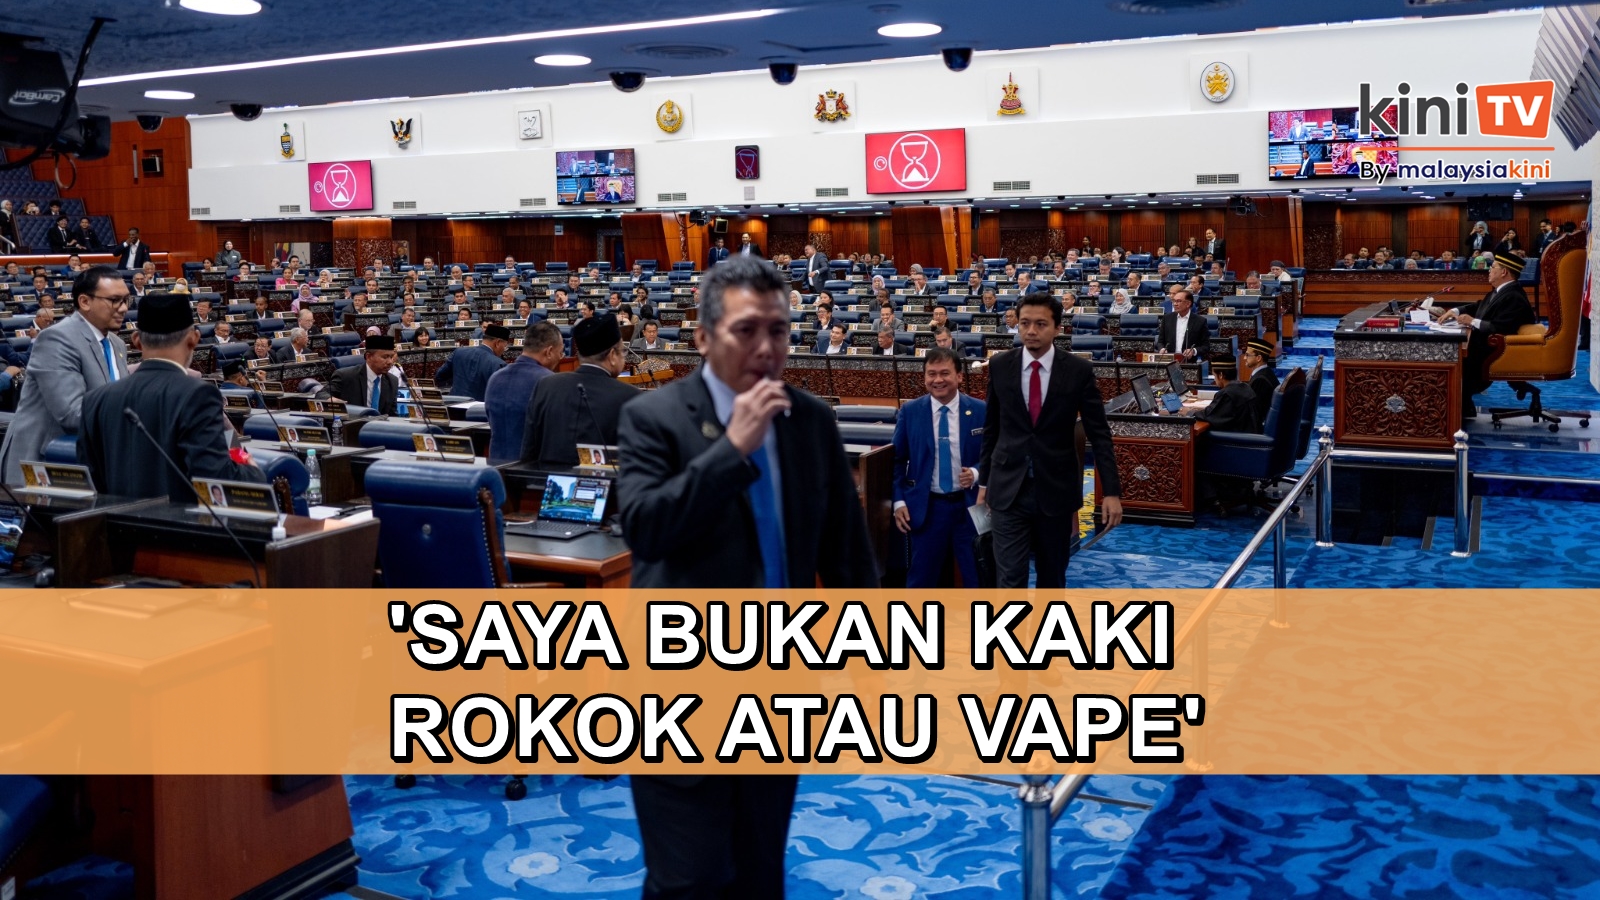 'Saya pegang pen, bukan hisap vape' - Ahli parlimen PN